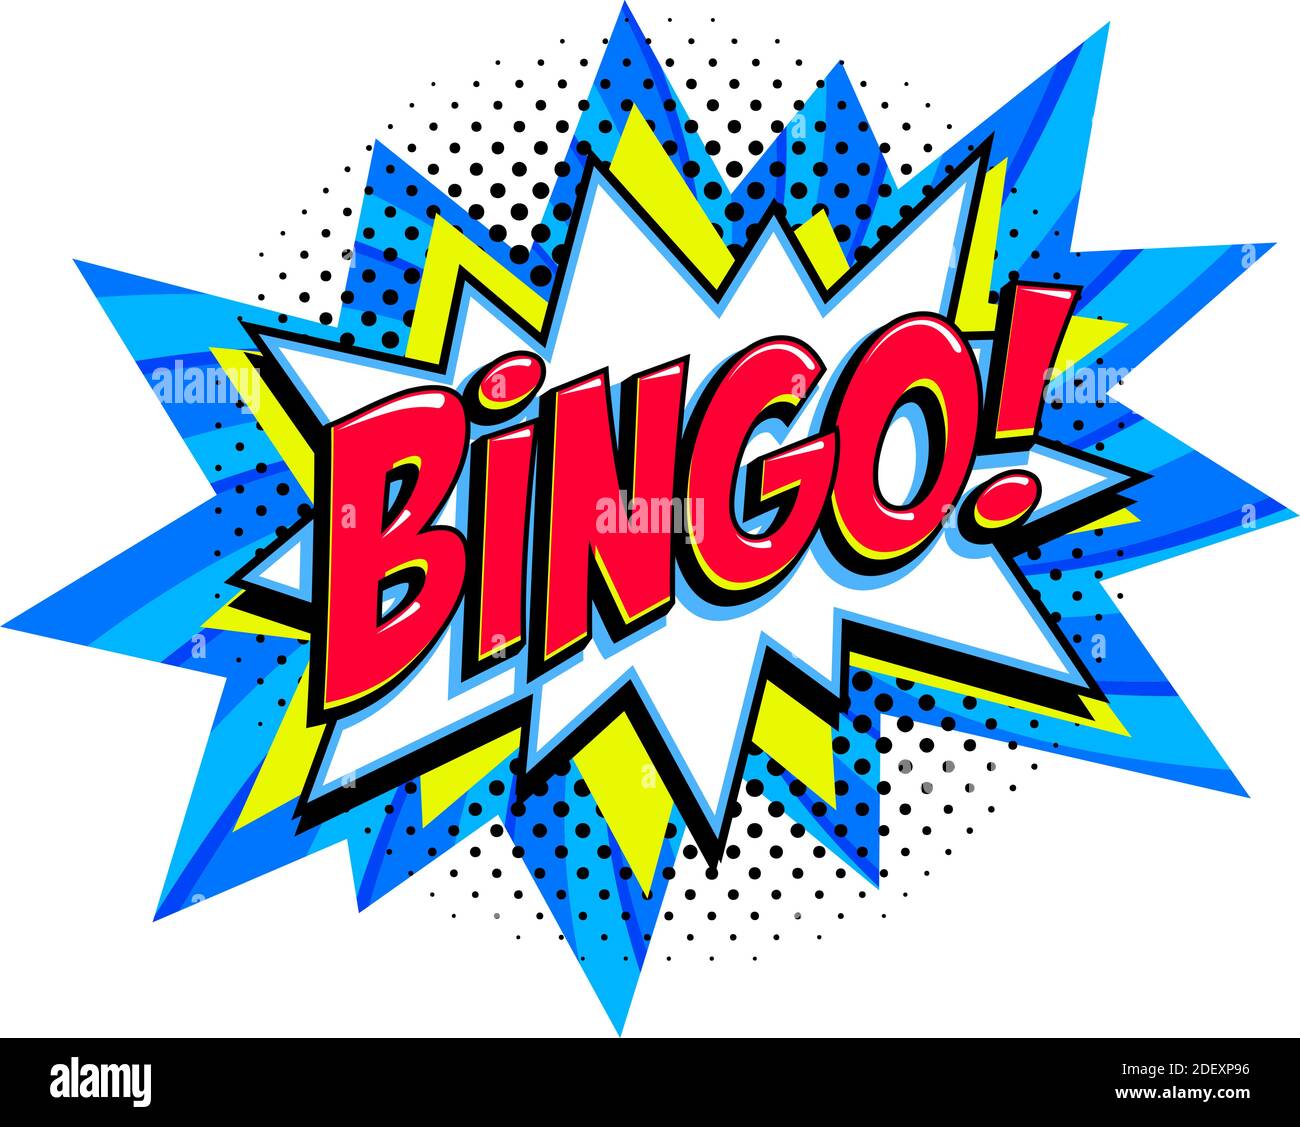 Bingo - Lotterie blauen Vektor-Banner. Lotterie-Spiel Hintergrund in Comic Pop-Art-Stil. Cartoon Vektorgrafik. Stock Vektor